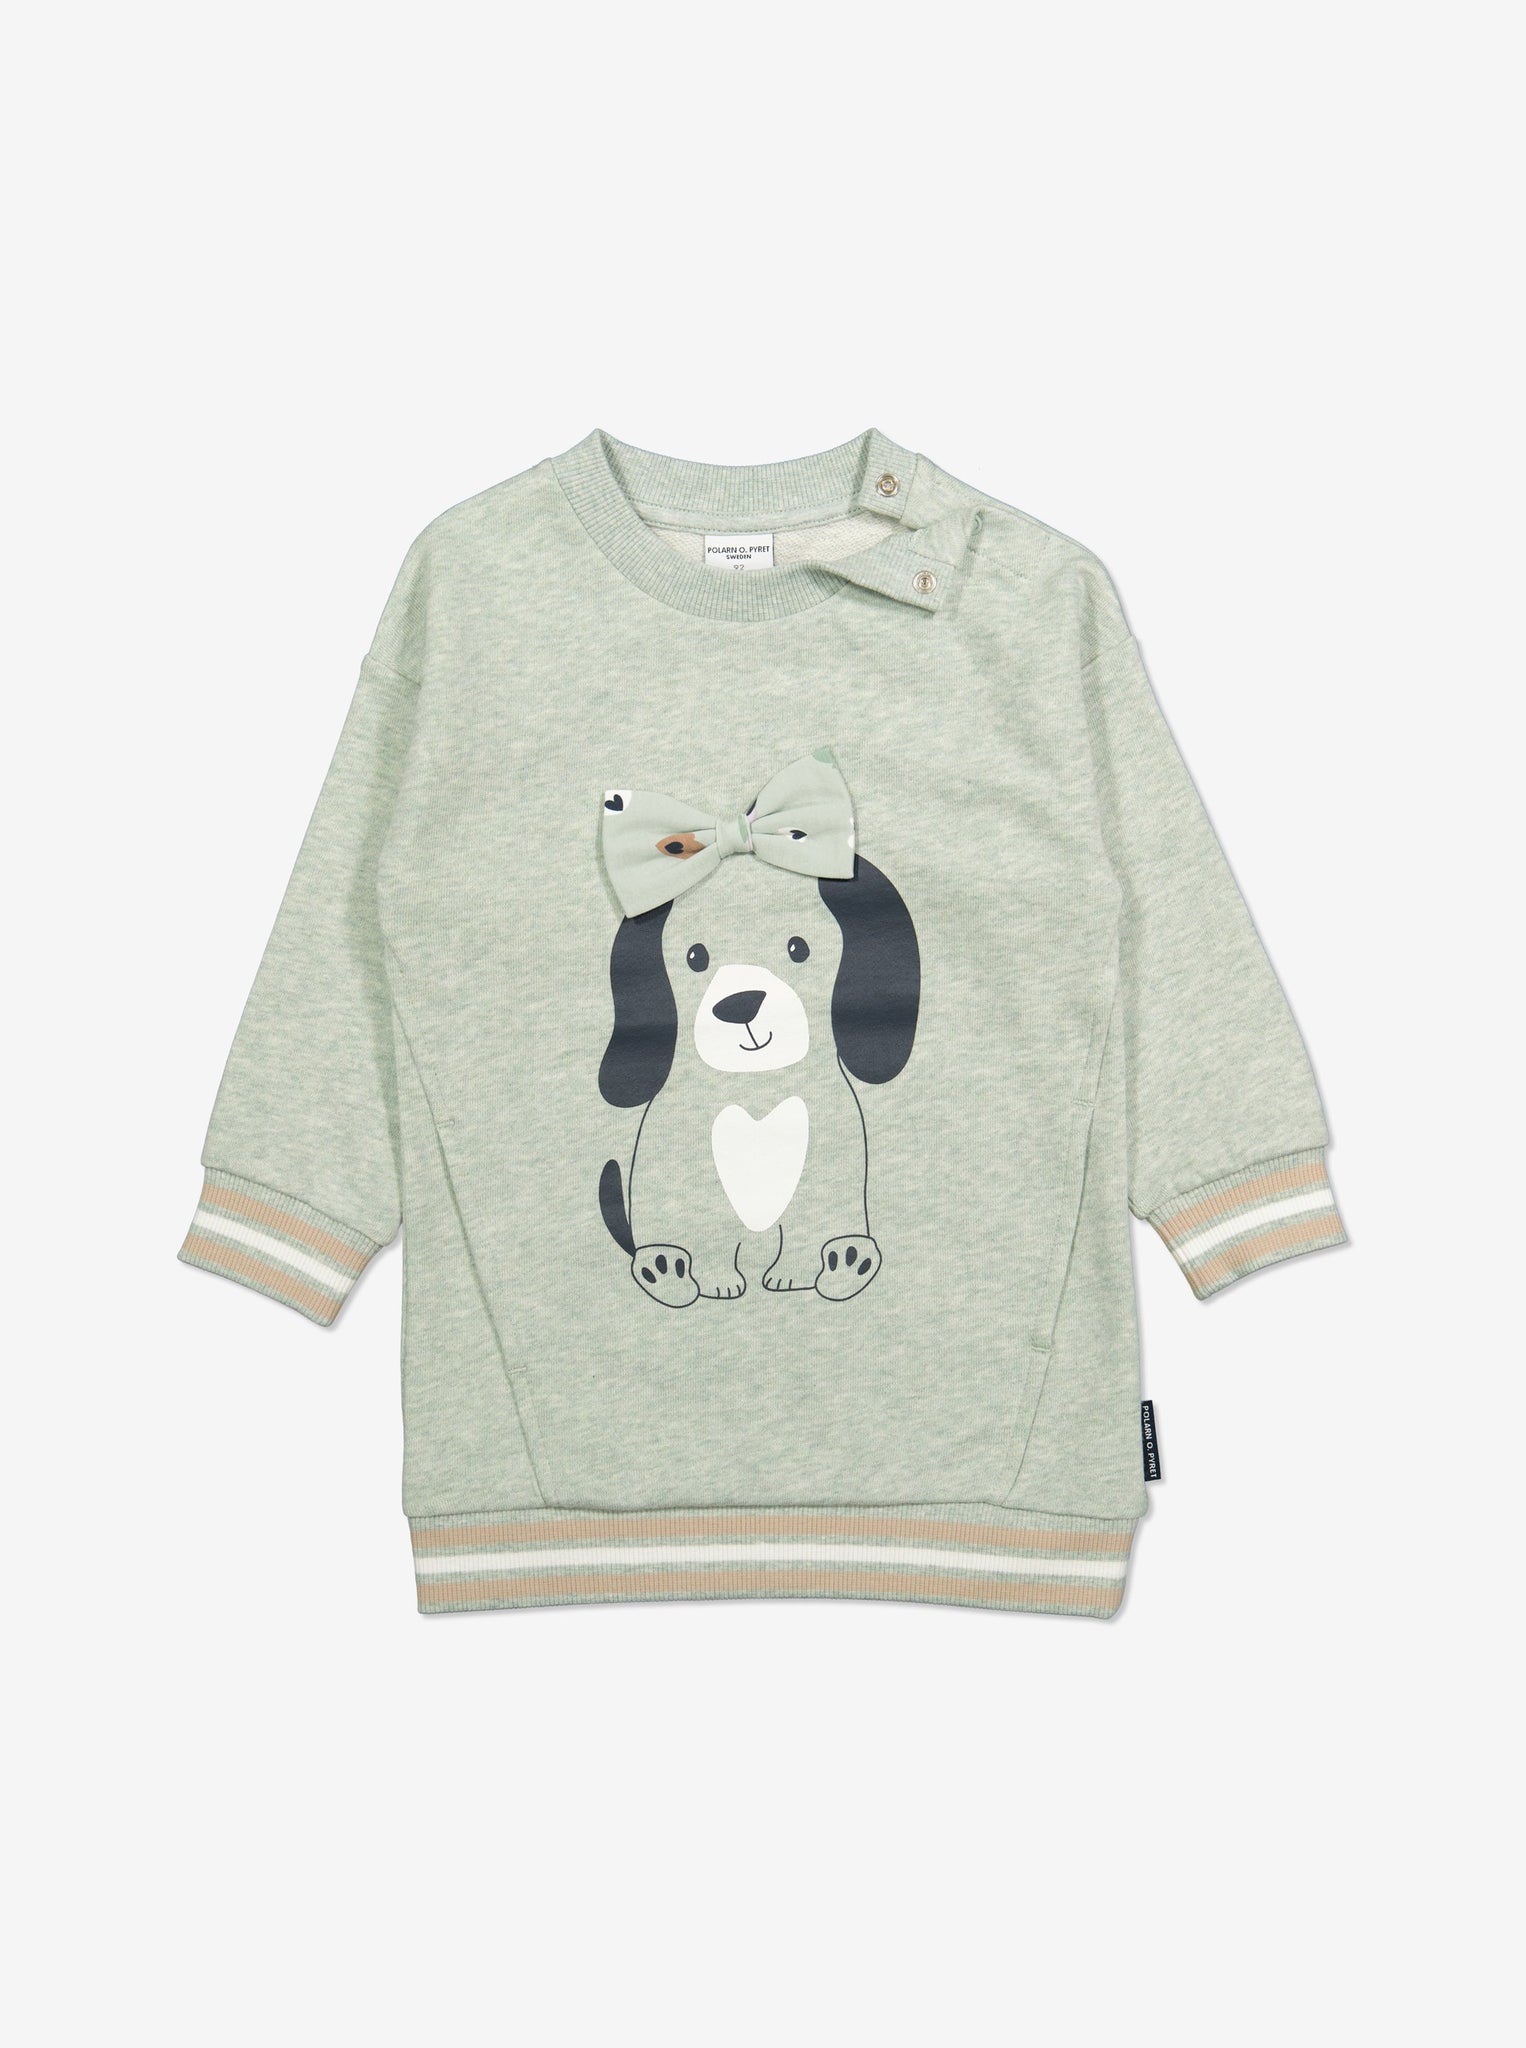  Organic Green Puppy Kids Sweatshirt from Polarn O. Pyret Kidswear. Made with 100% organic cotton.